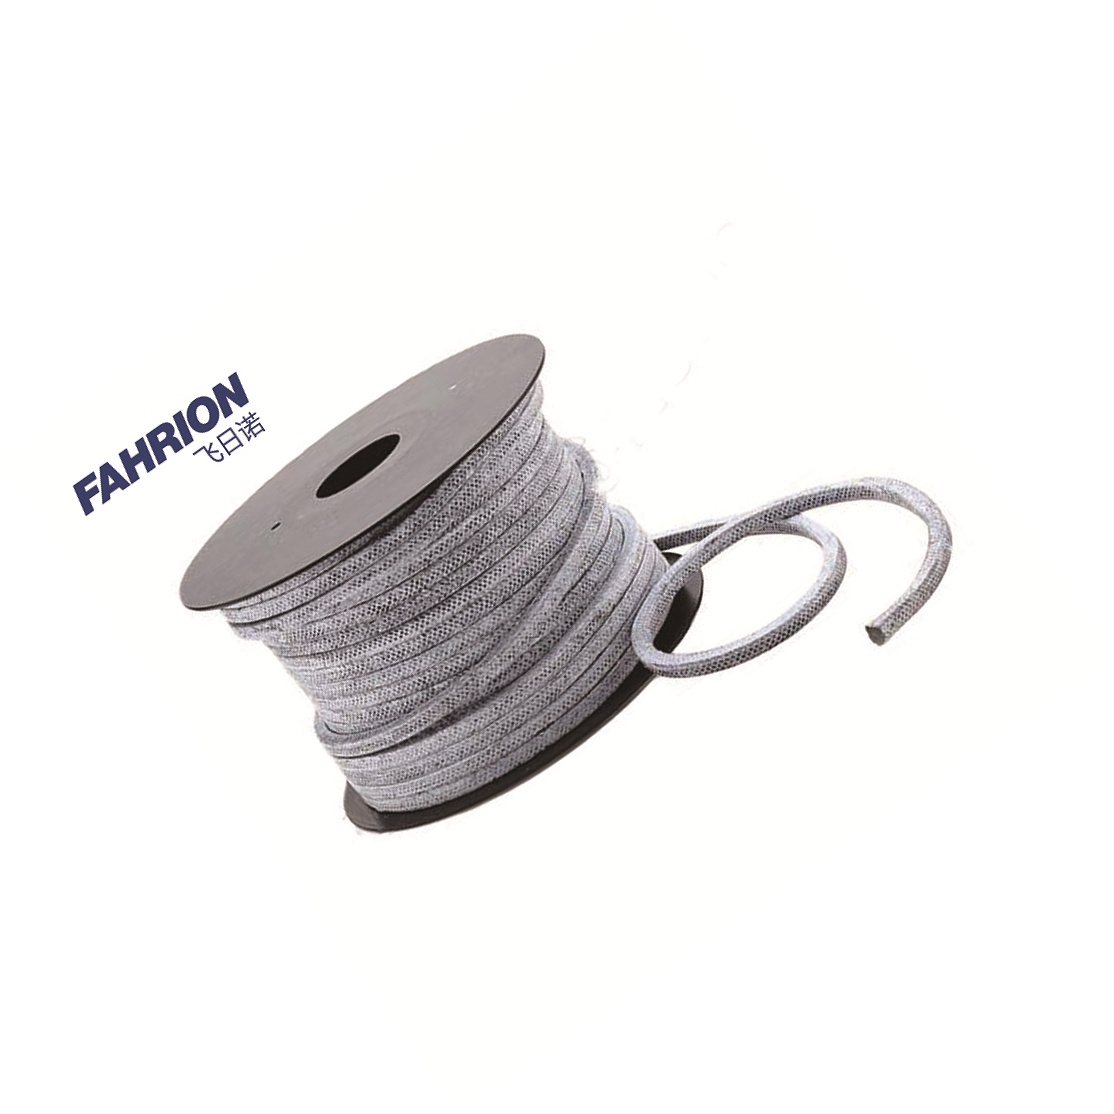 FAHRION 碳纤维盘根 GD99-900-3765